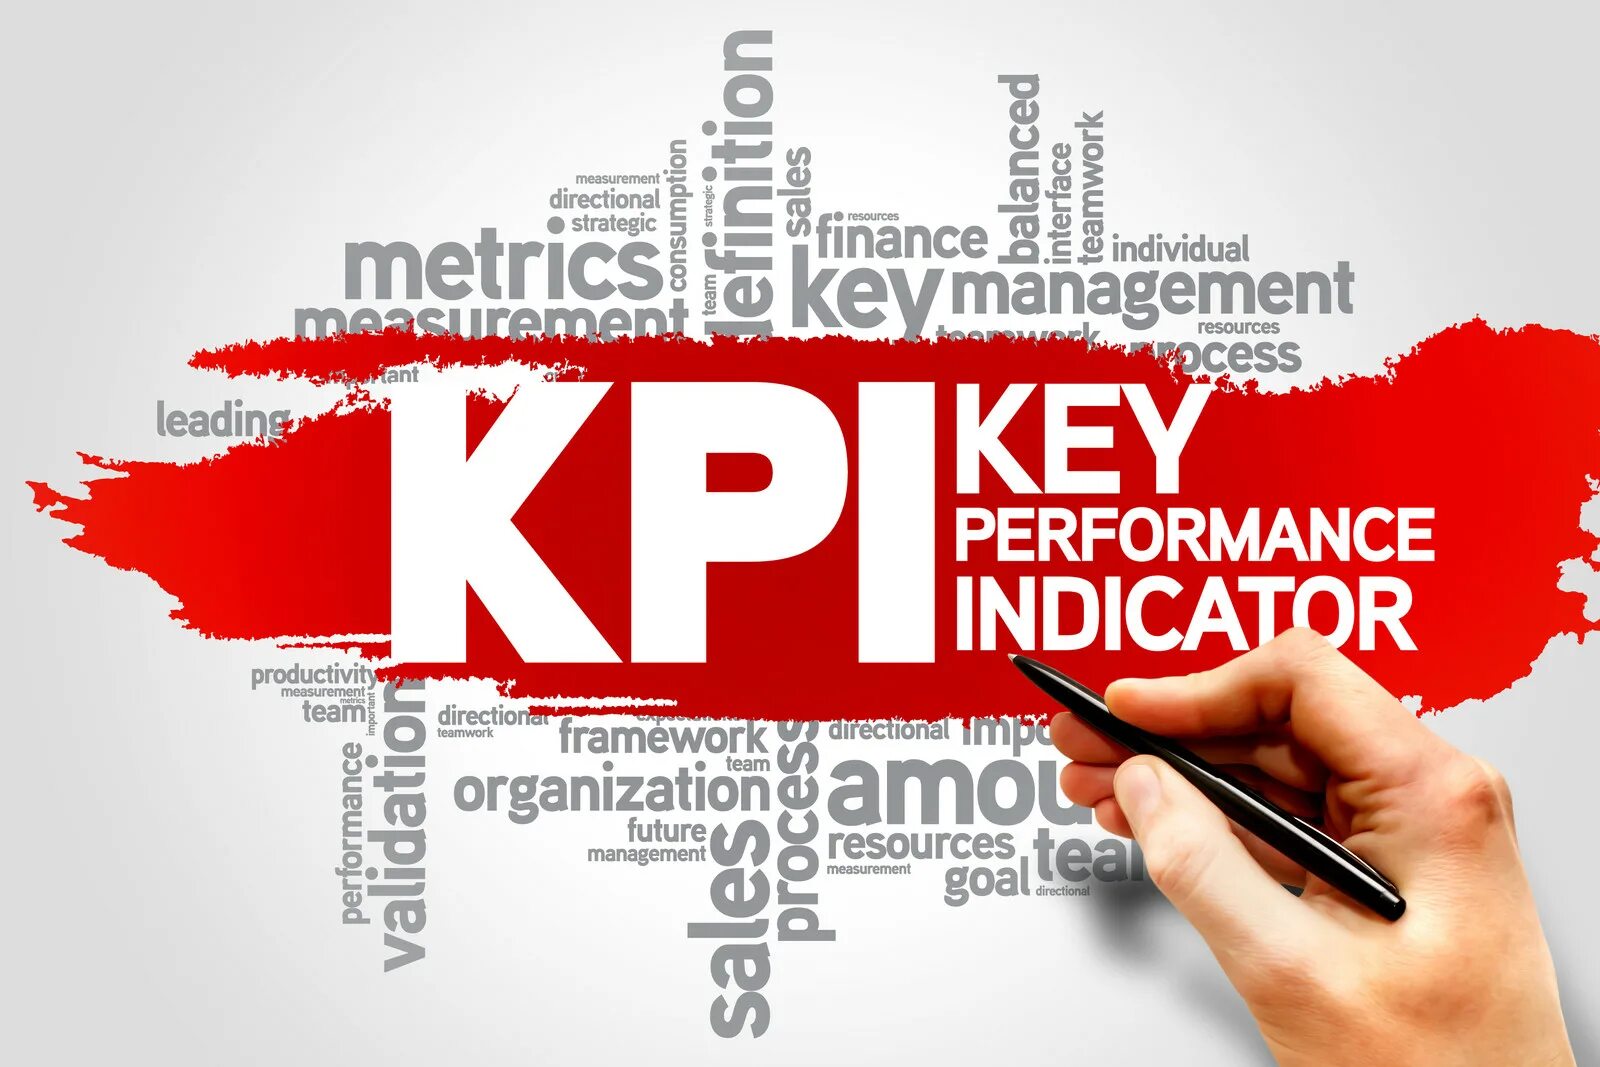 Performance indicators. KPI картинки. Ключевые показатели. Ключевые показатели заставка. KPI (Key Performance indicators).